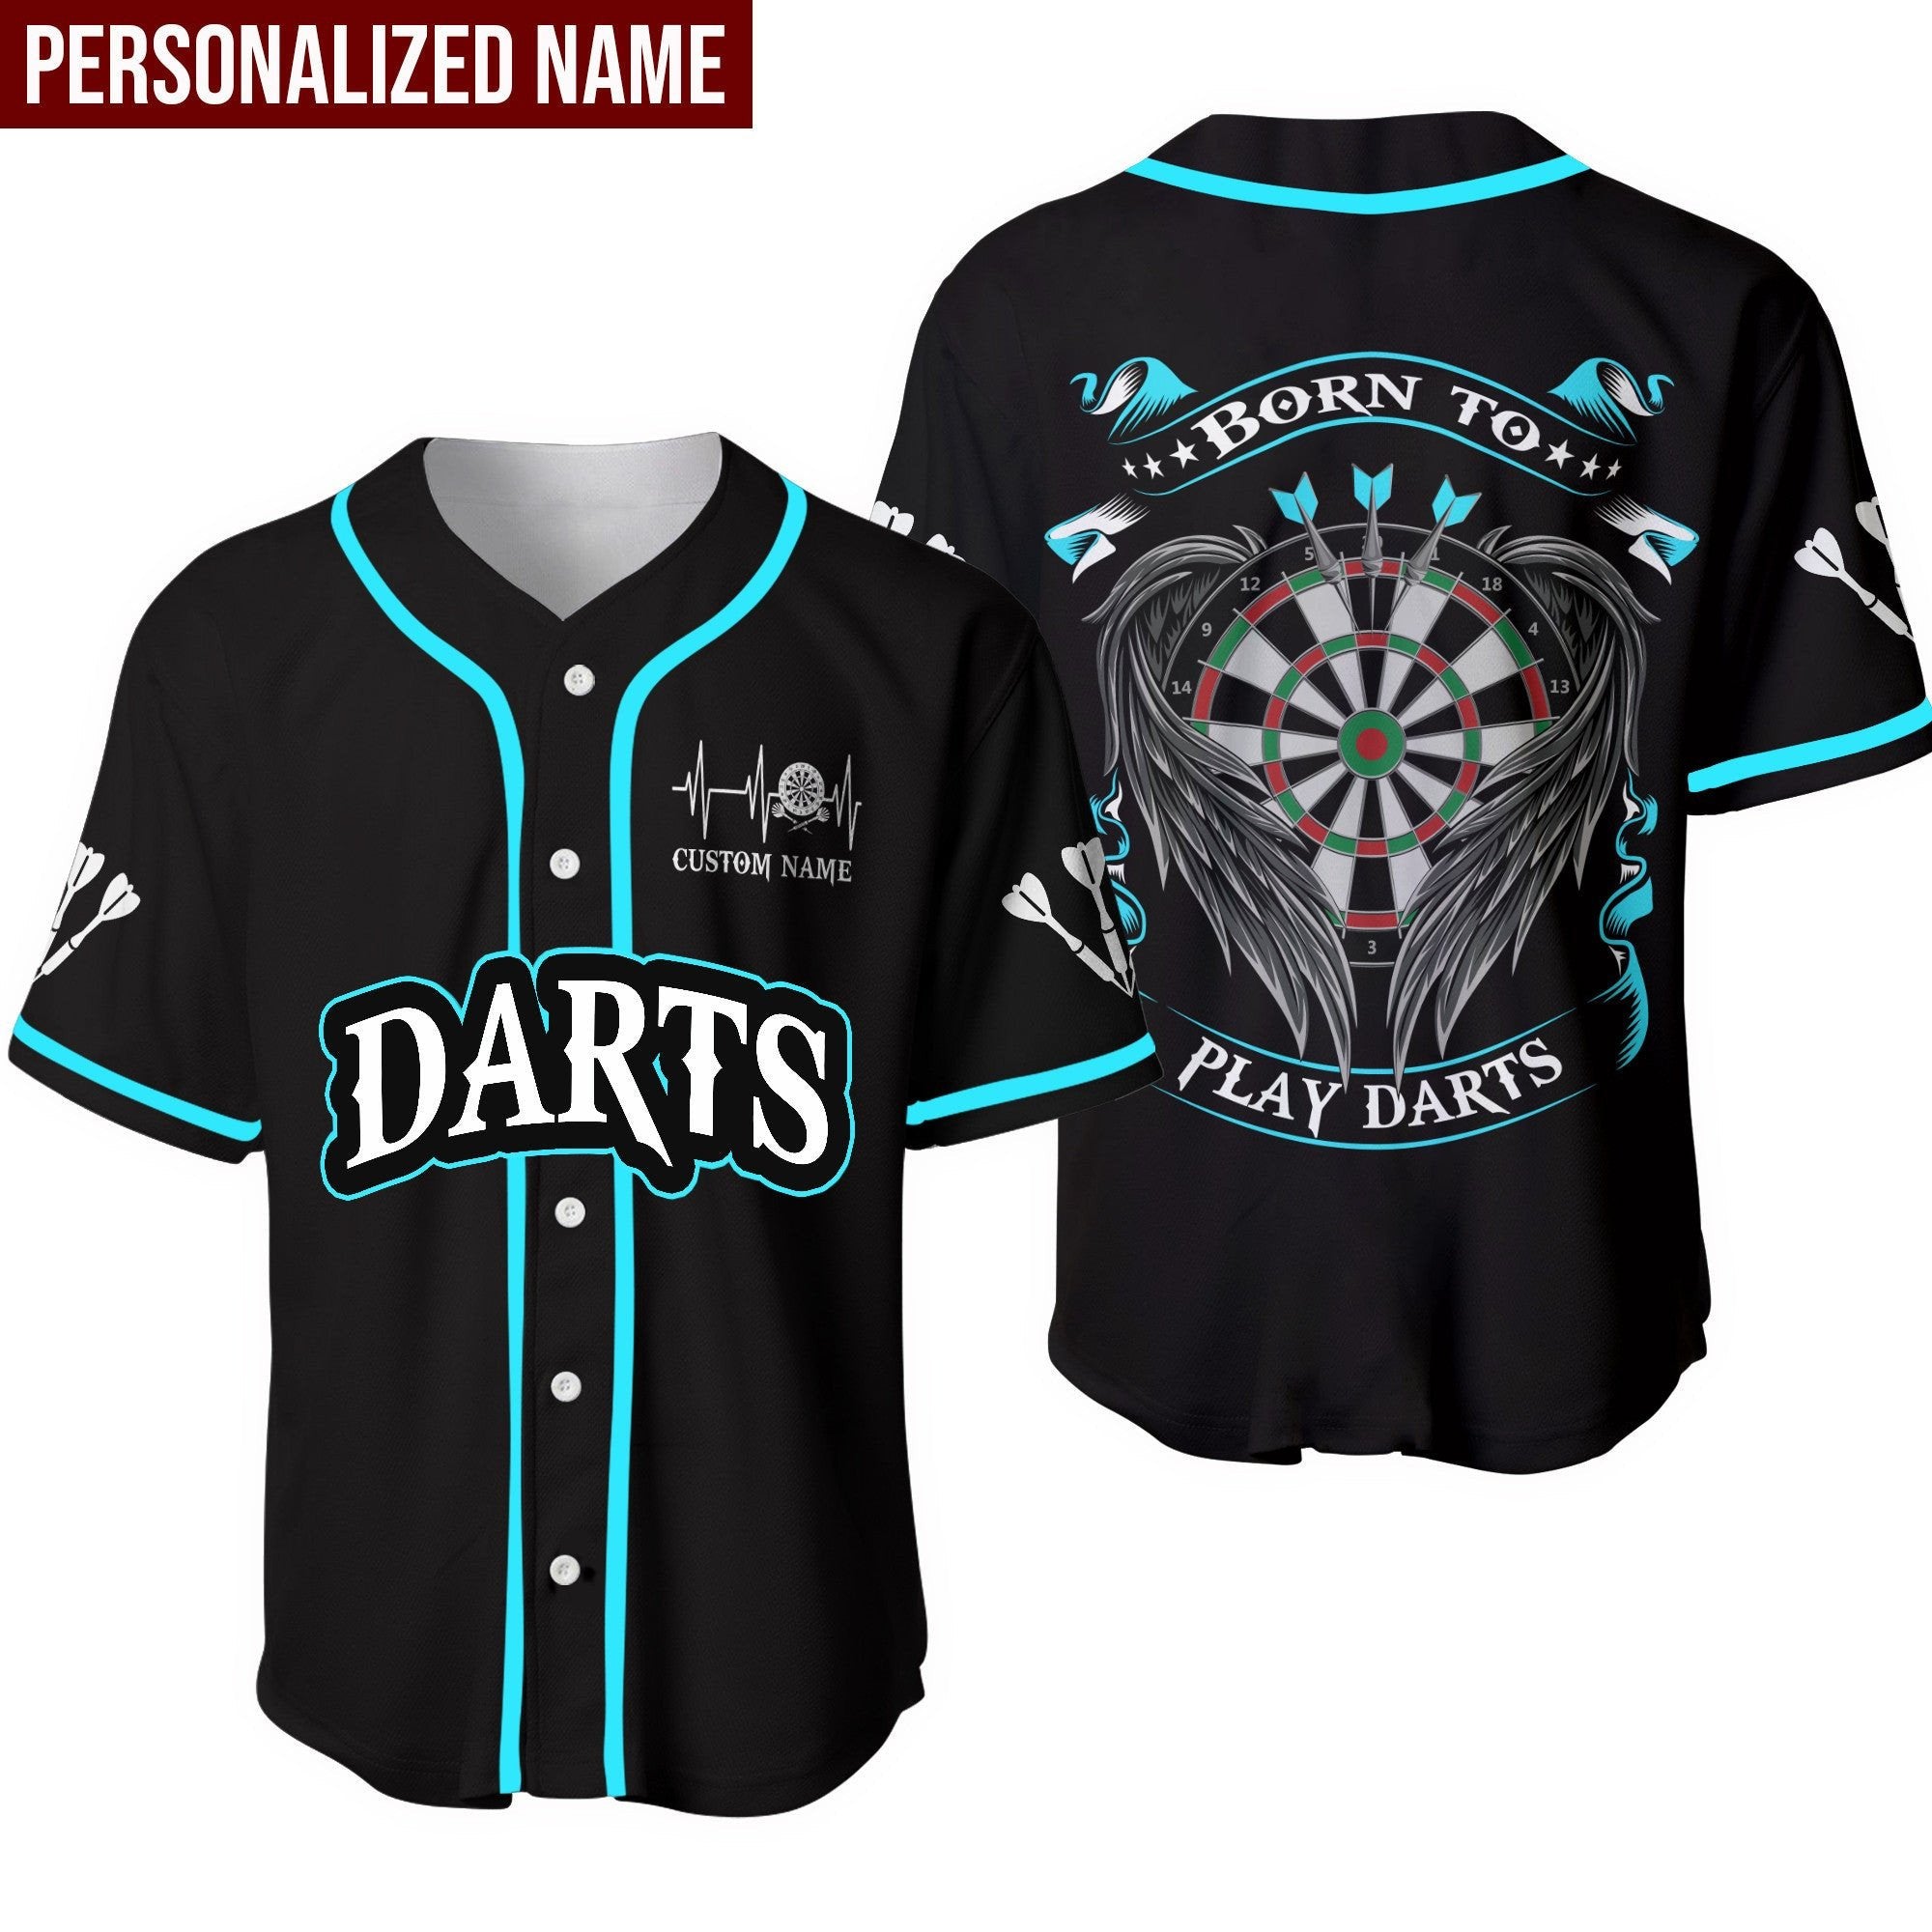 Darts Born To Play Darts Personalized Baseball Jersey/ Shirt for Dart Lover